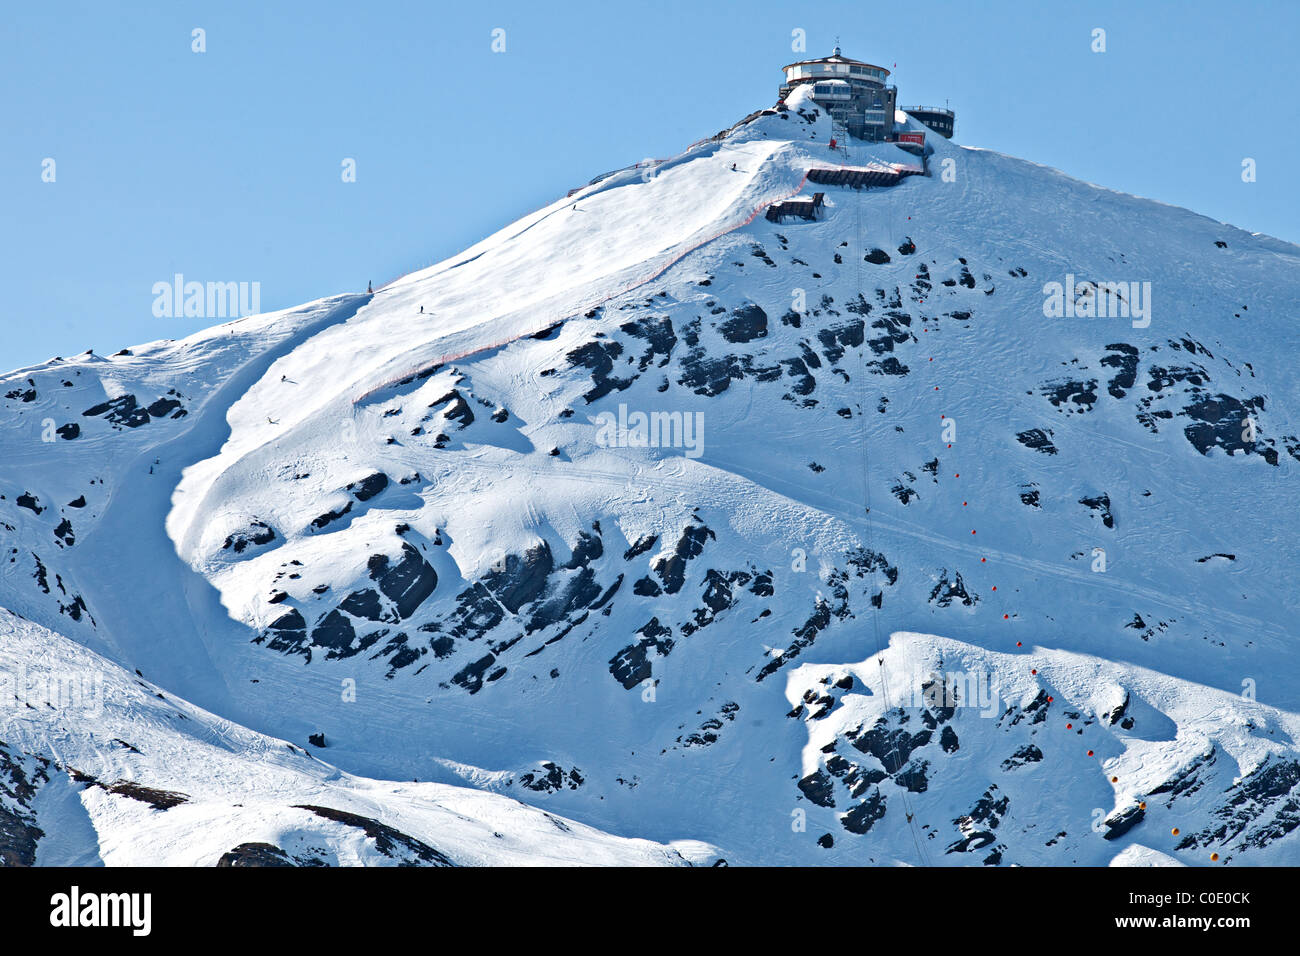 Inferno-Ski-Piste und Restaurant Piz Gloria, Berner Oberland, Schweiz Stockfoto